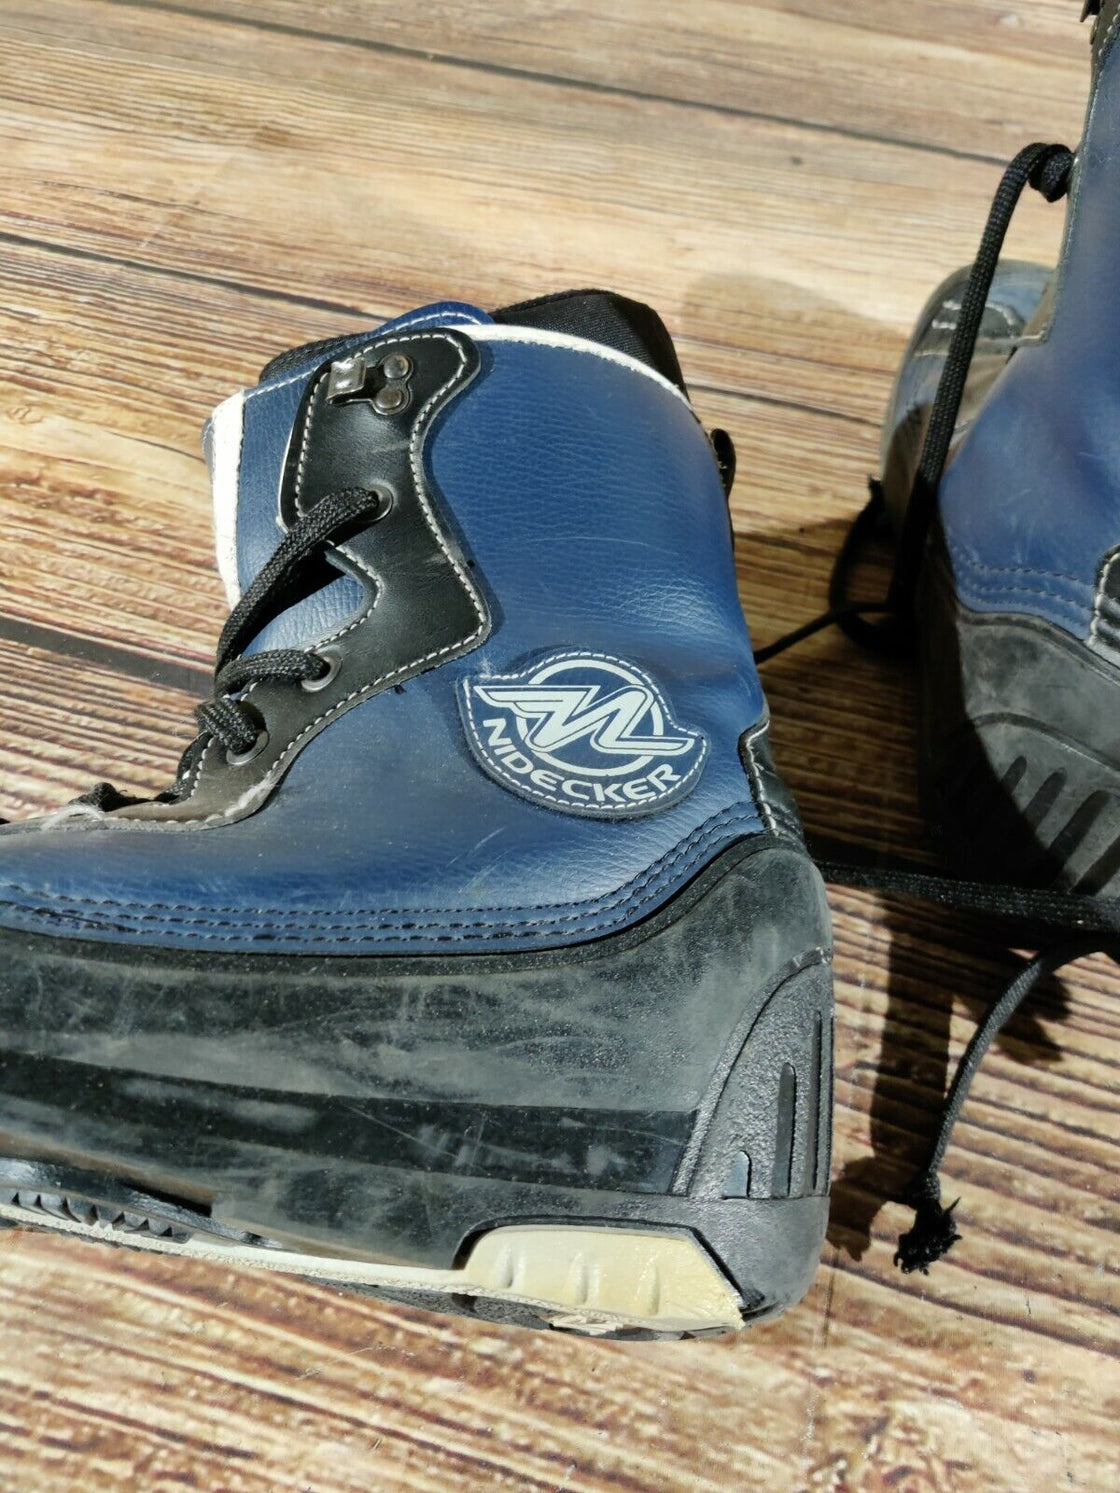 NIDECHER Vintage Snowboard Boots Retro Size EU43, US9, UK8, Mondo 270 mm A